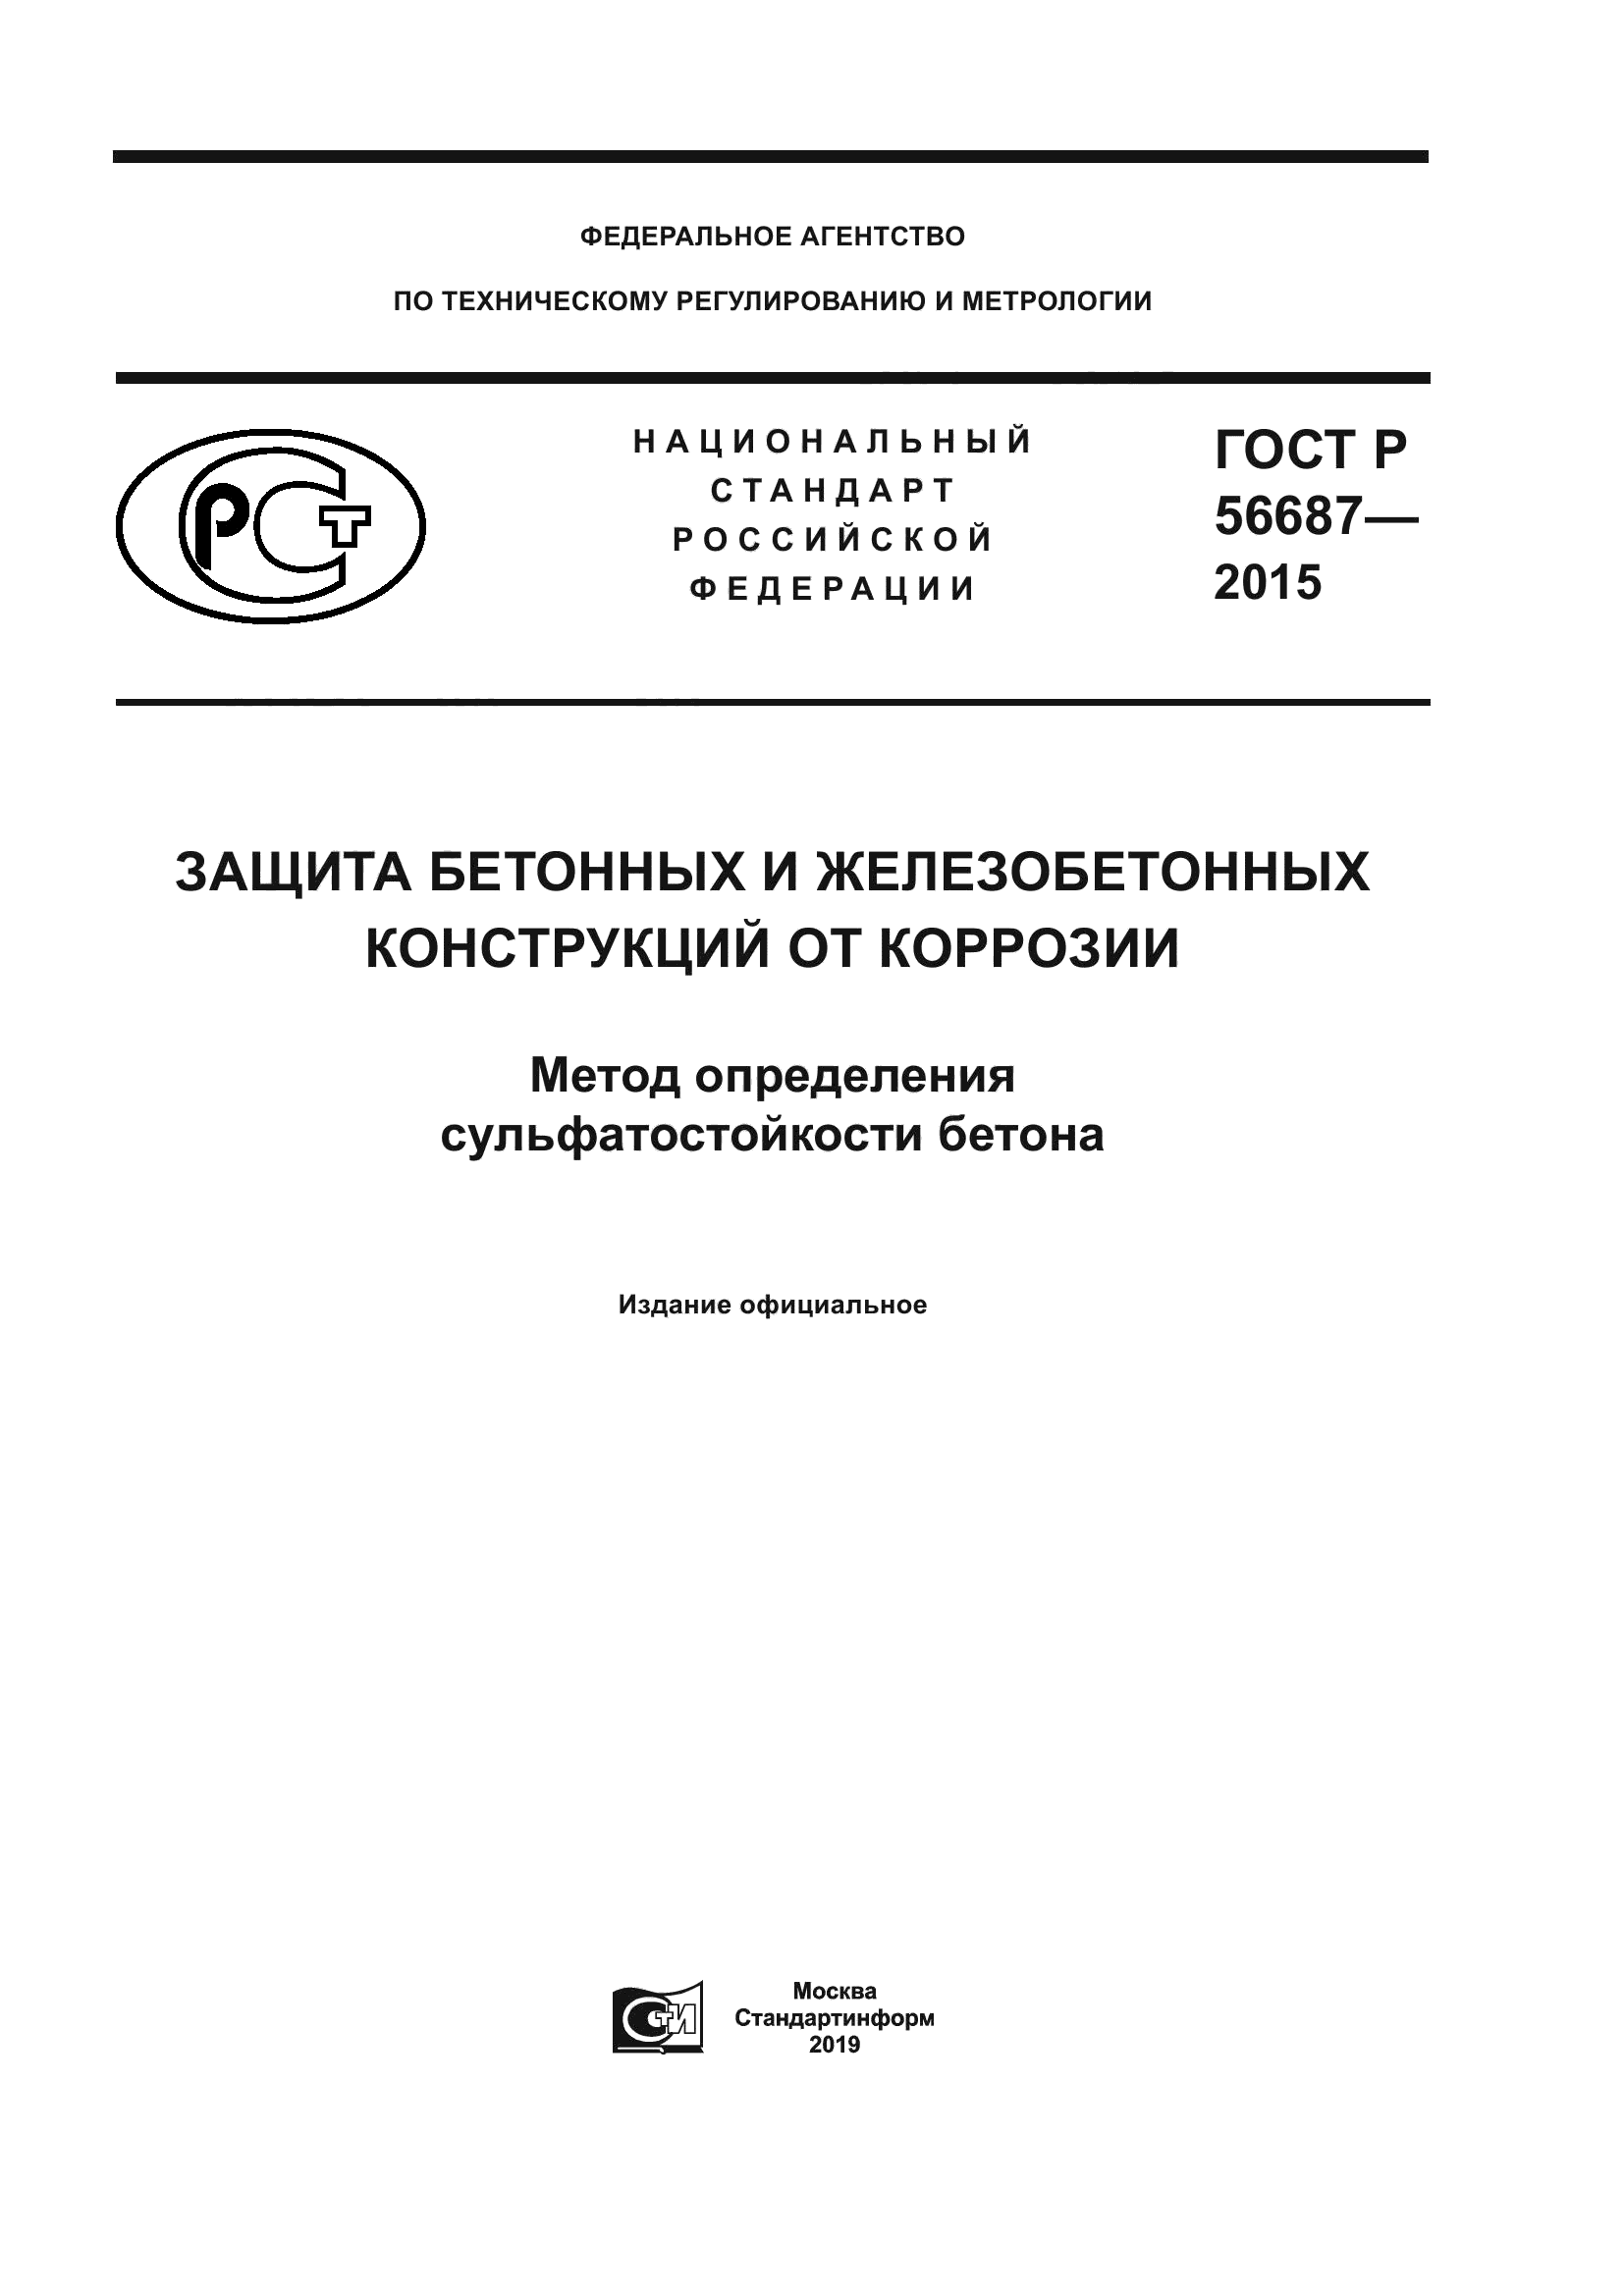 ГОСТ Р 56687-2015